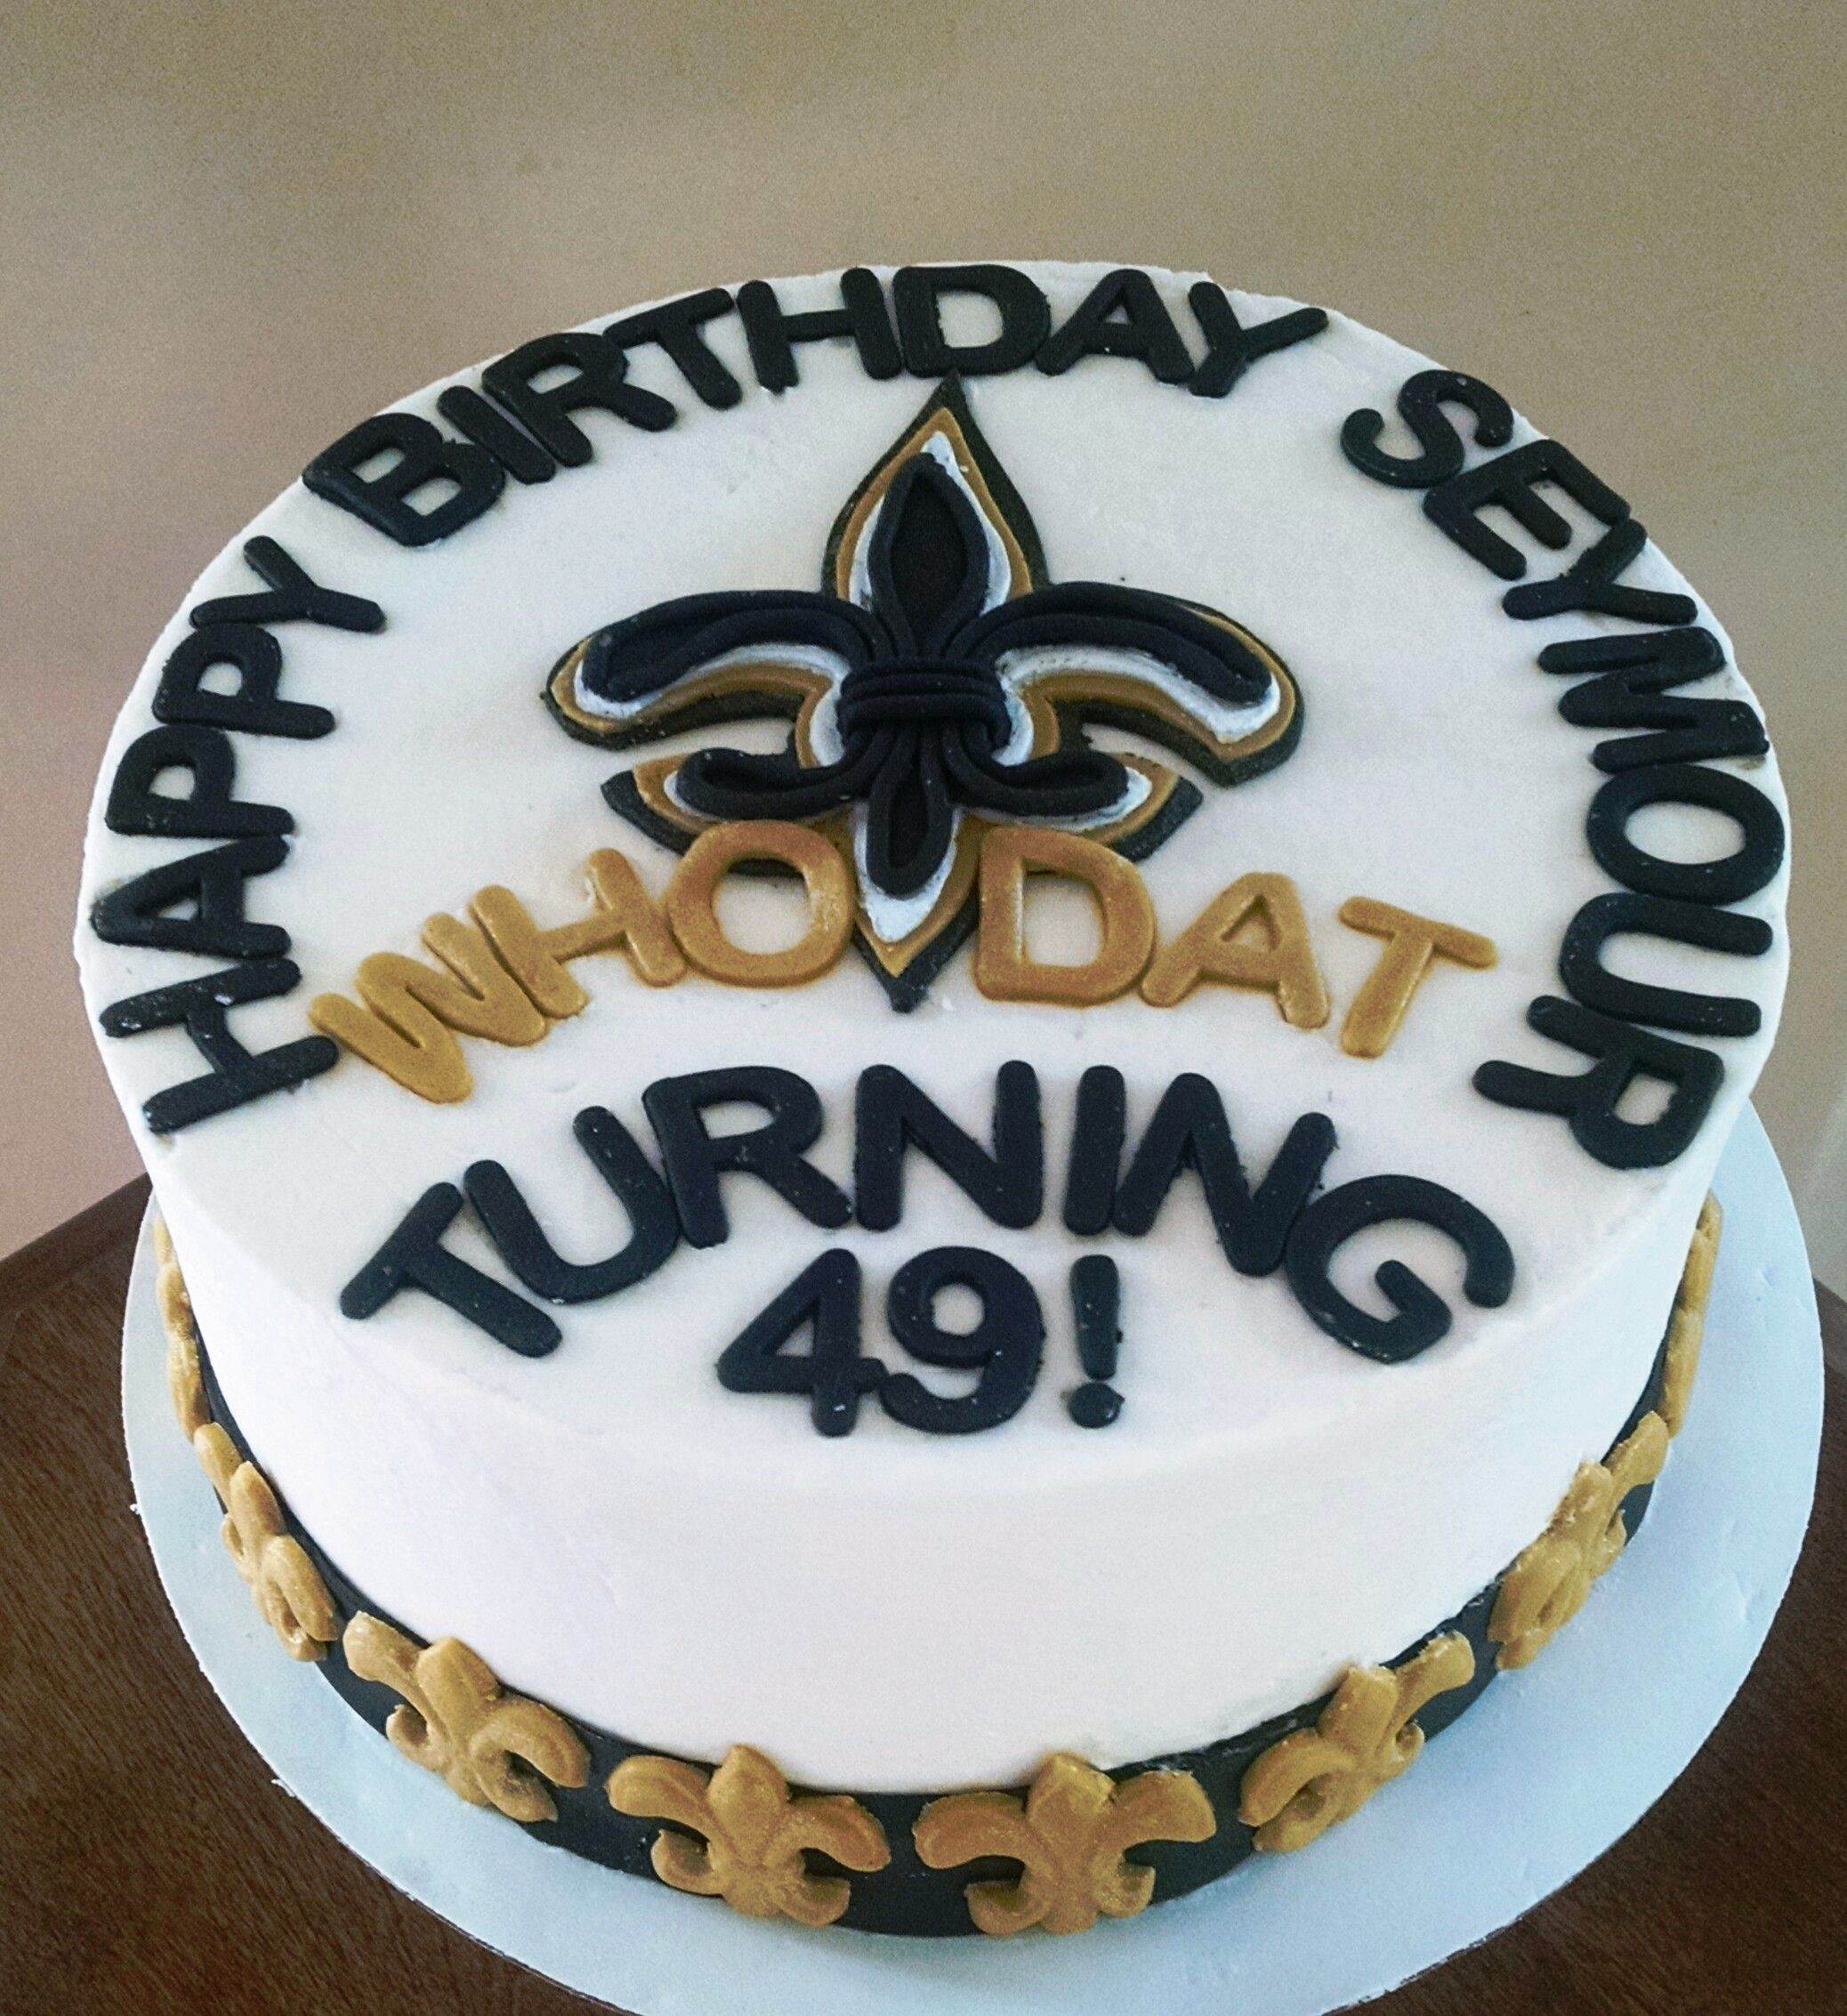 Birthday Cakes New Orleans
 New Orleans Saints Birthday Cake with Fleur de Lis Border